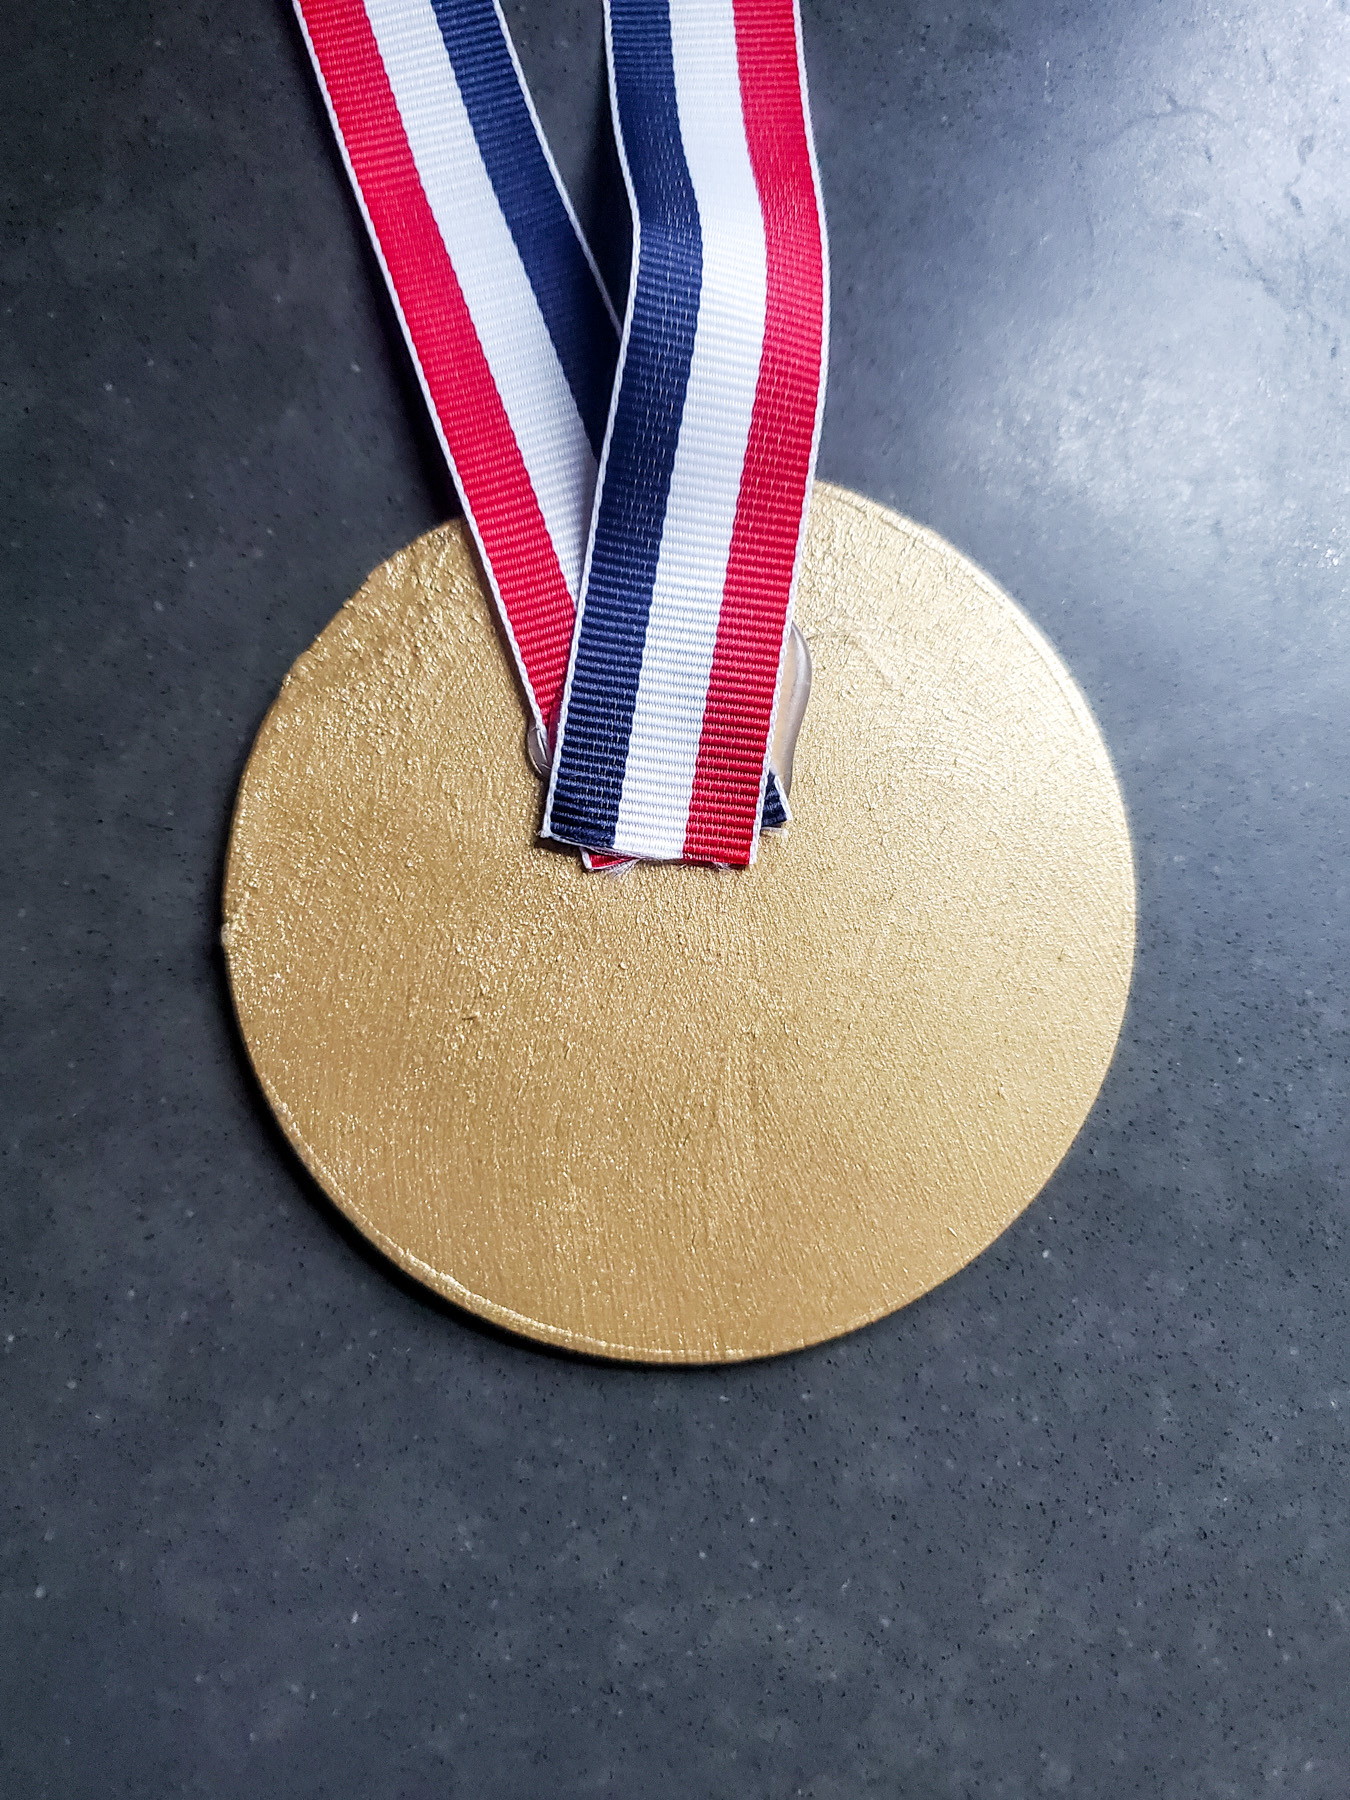 DIY gold medal for gymnast halloween costume